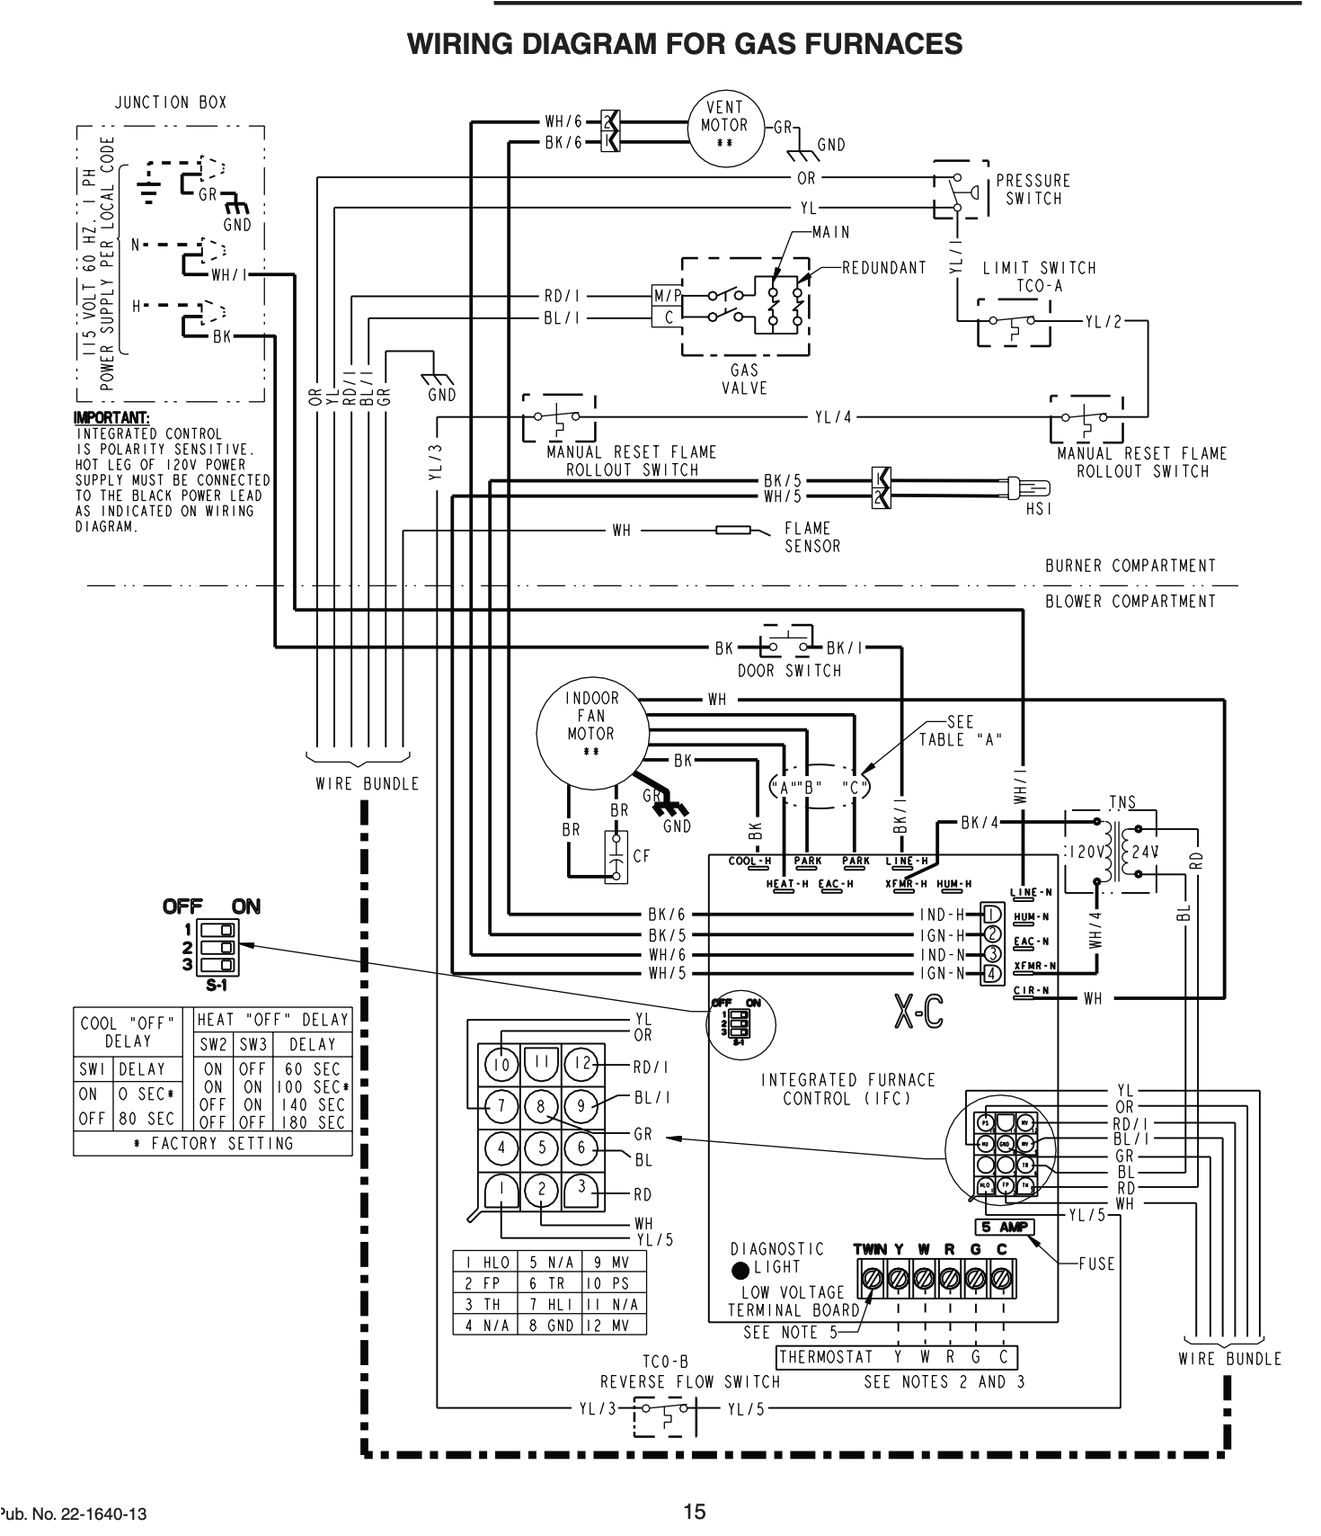 trane xr80 furnace wiring diagram schema diagram database trane furnace diagram fan limit switch q a